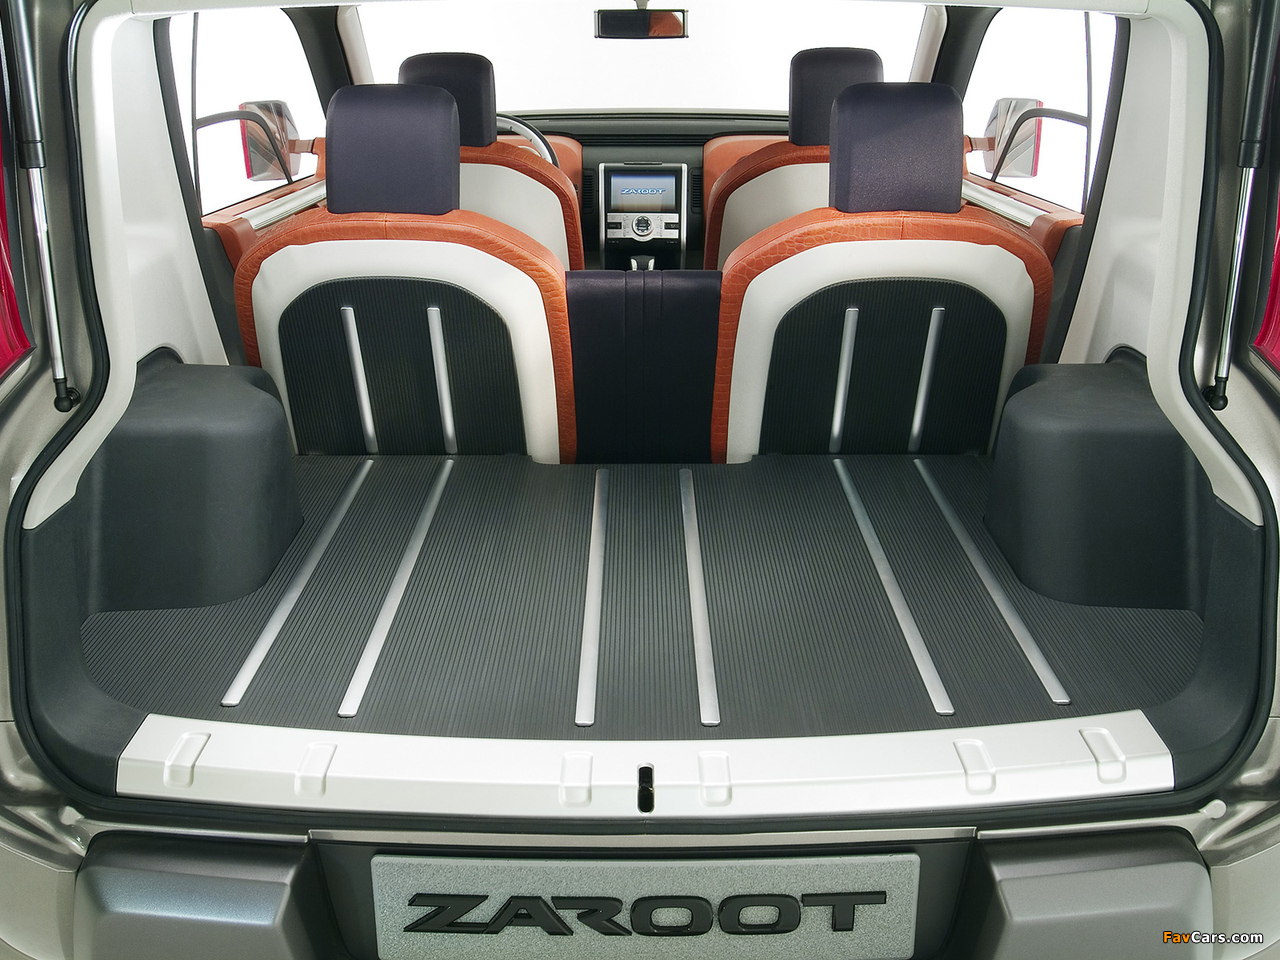 Nissan Zaroot Concept 2005 pictures (1280 x 960)